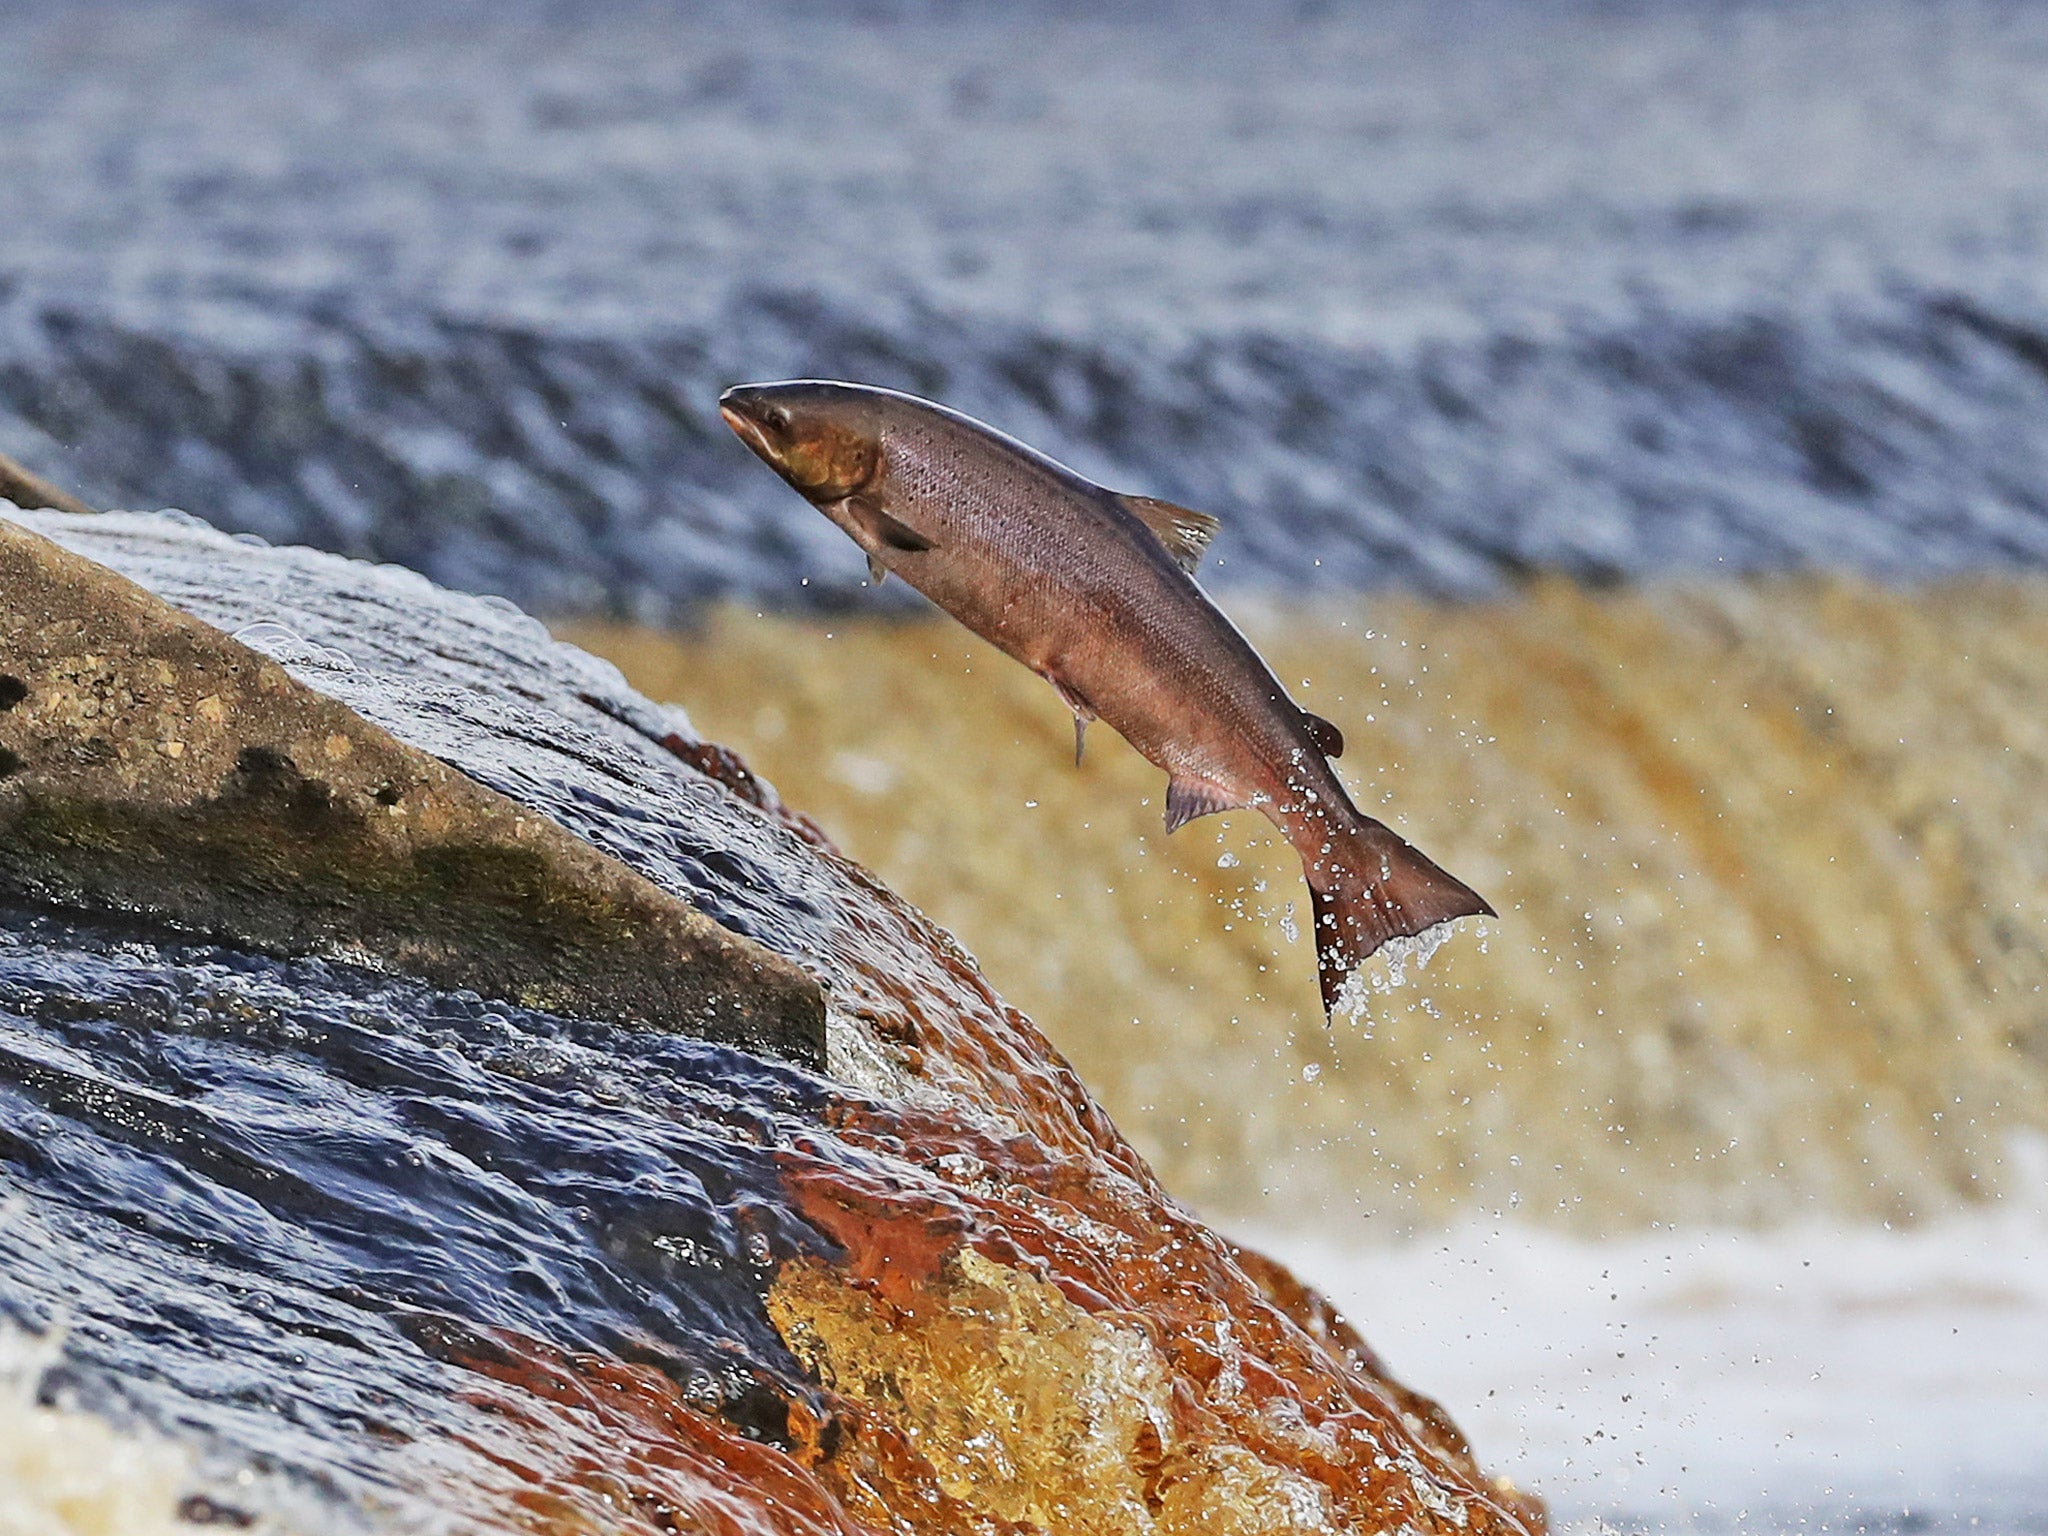 A healthy salmon makes its way upstream